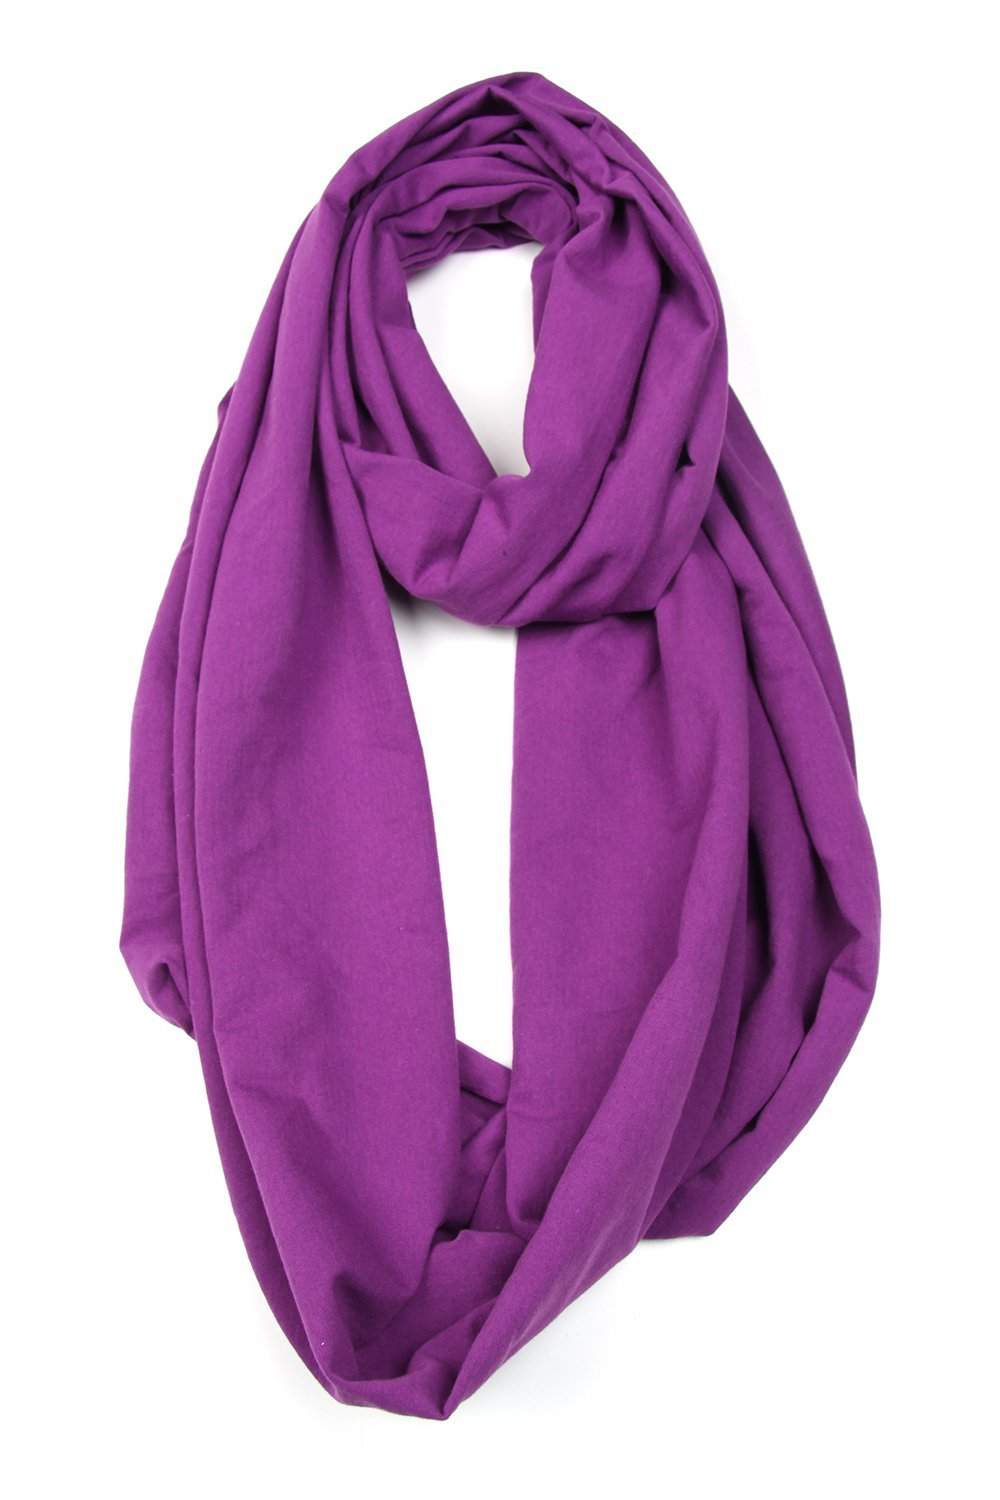 Purple Circle Scarf-scarves-Necklush